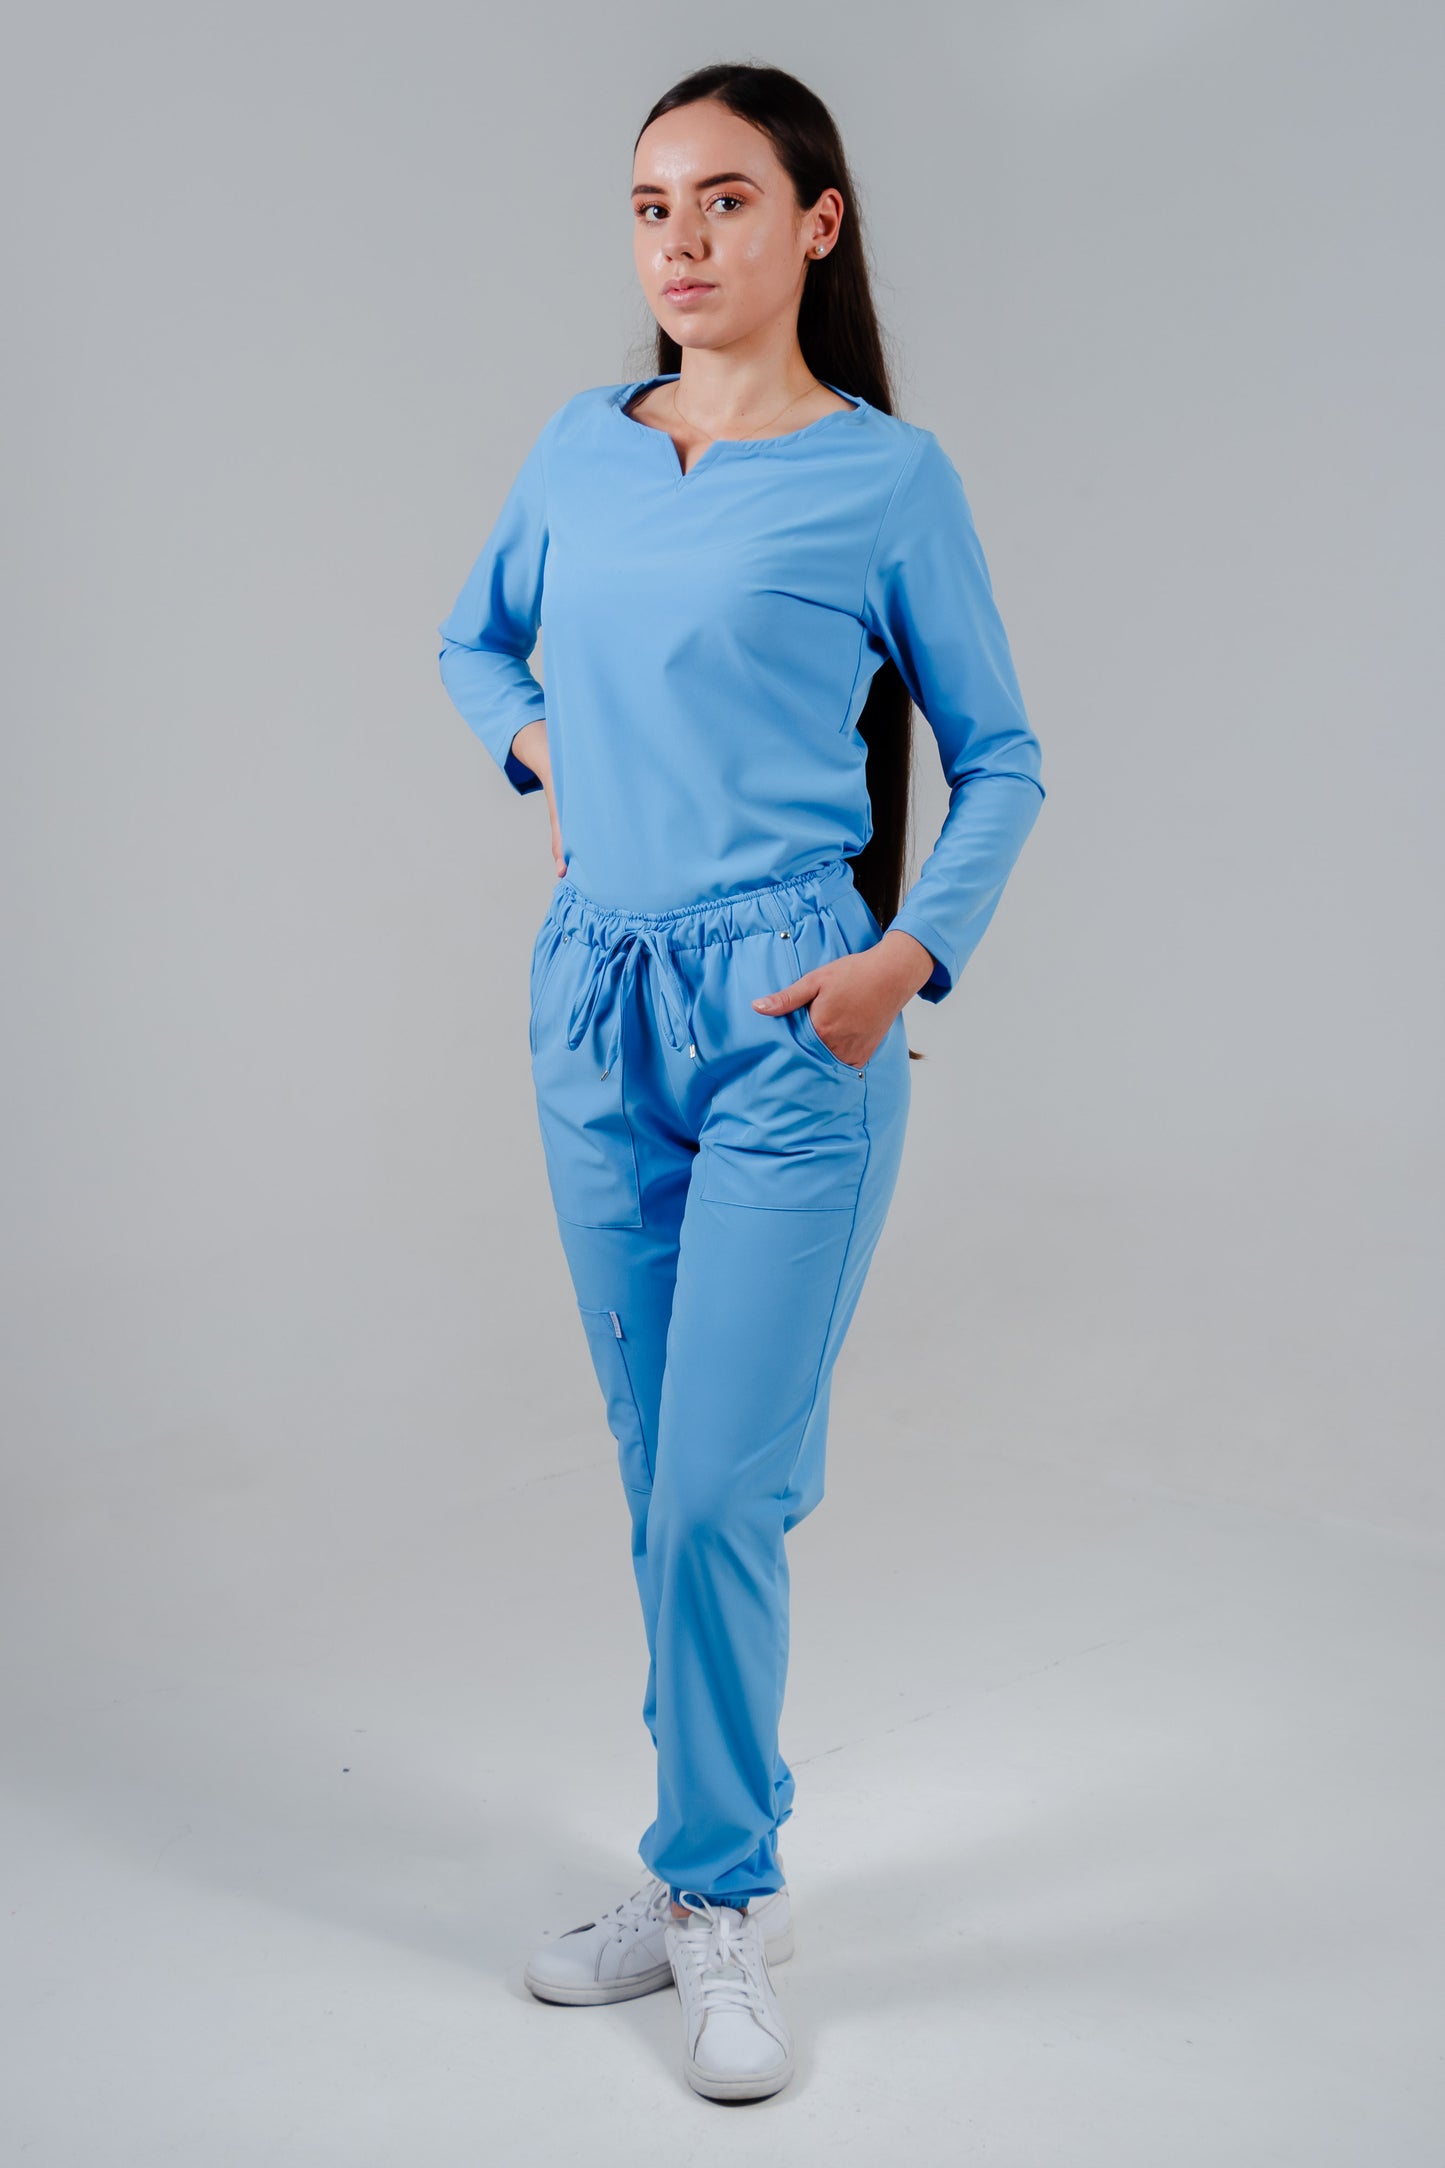 Uniforme quirúrgico para dama color azul francia, manga larga corte jogger. modelo winter marca addisonscrubs.